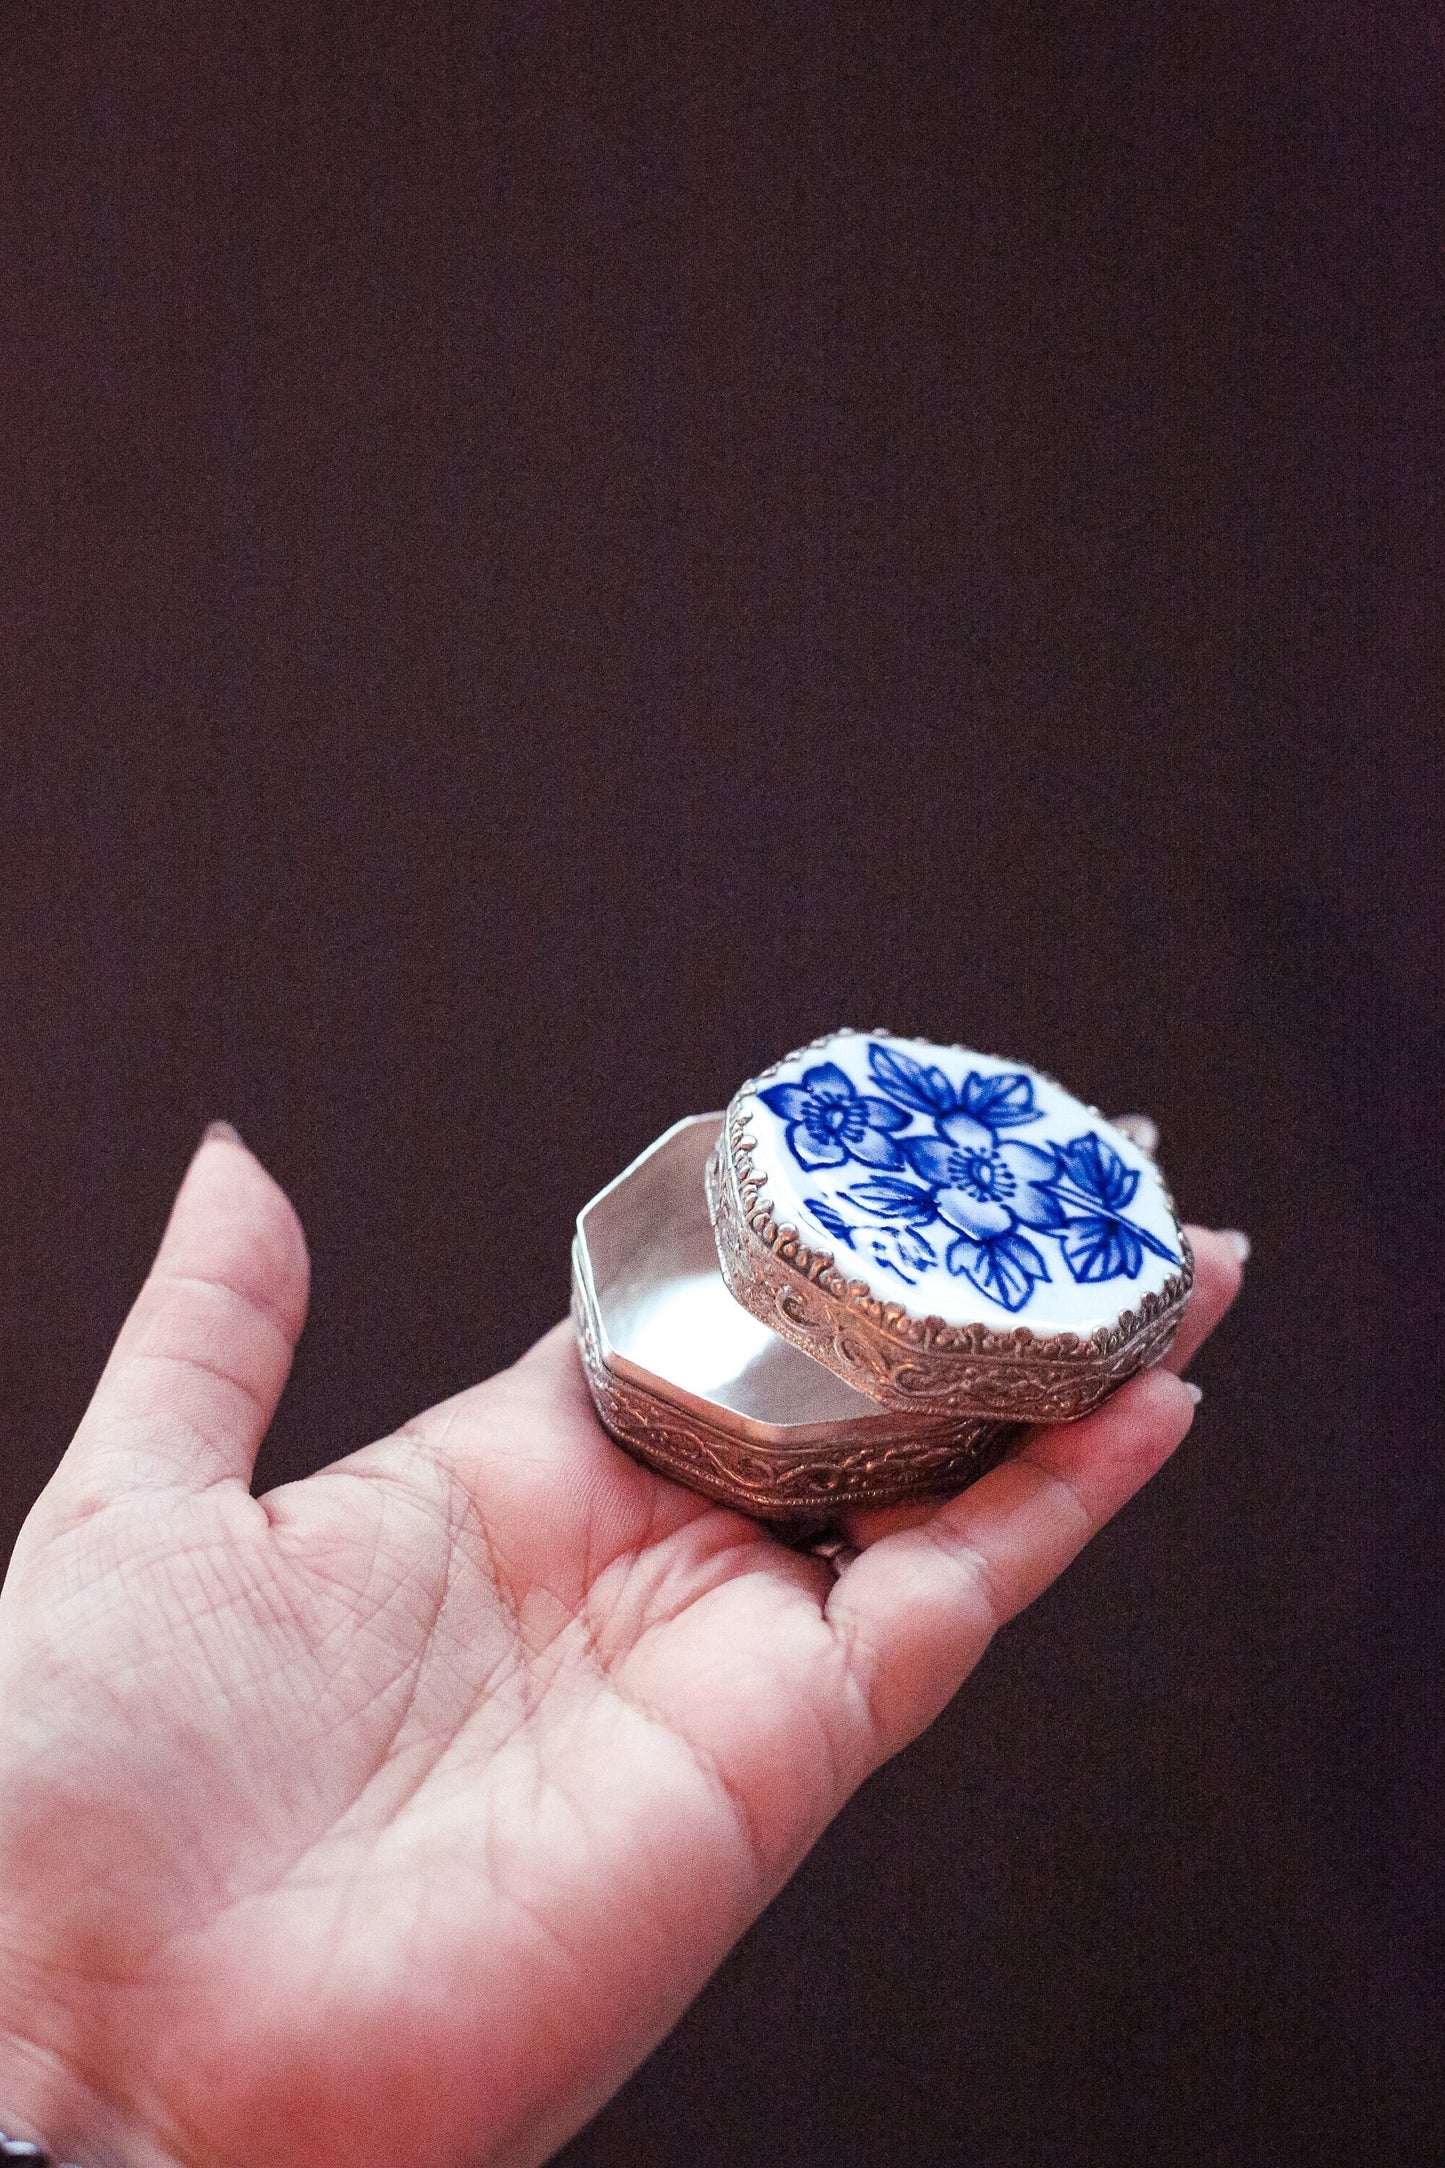 Small Blue & White Lidded Pill Box - Vintage Metal and Ceramic Trinket Box